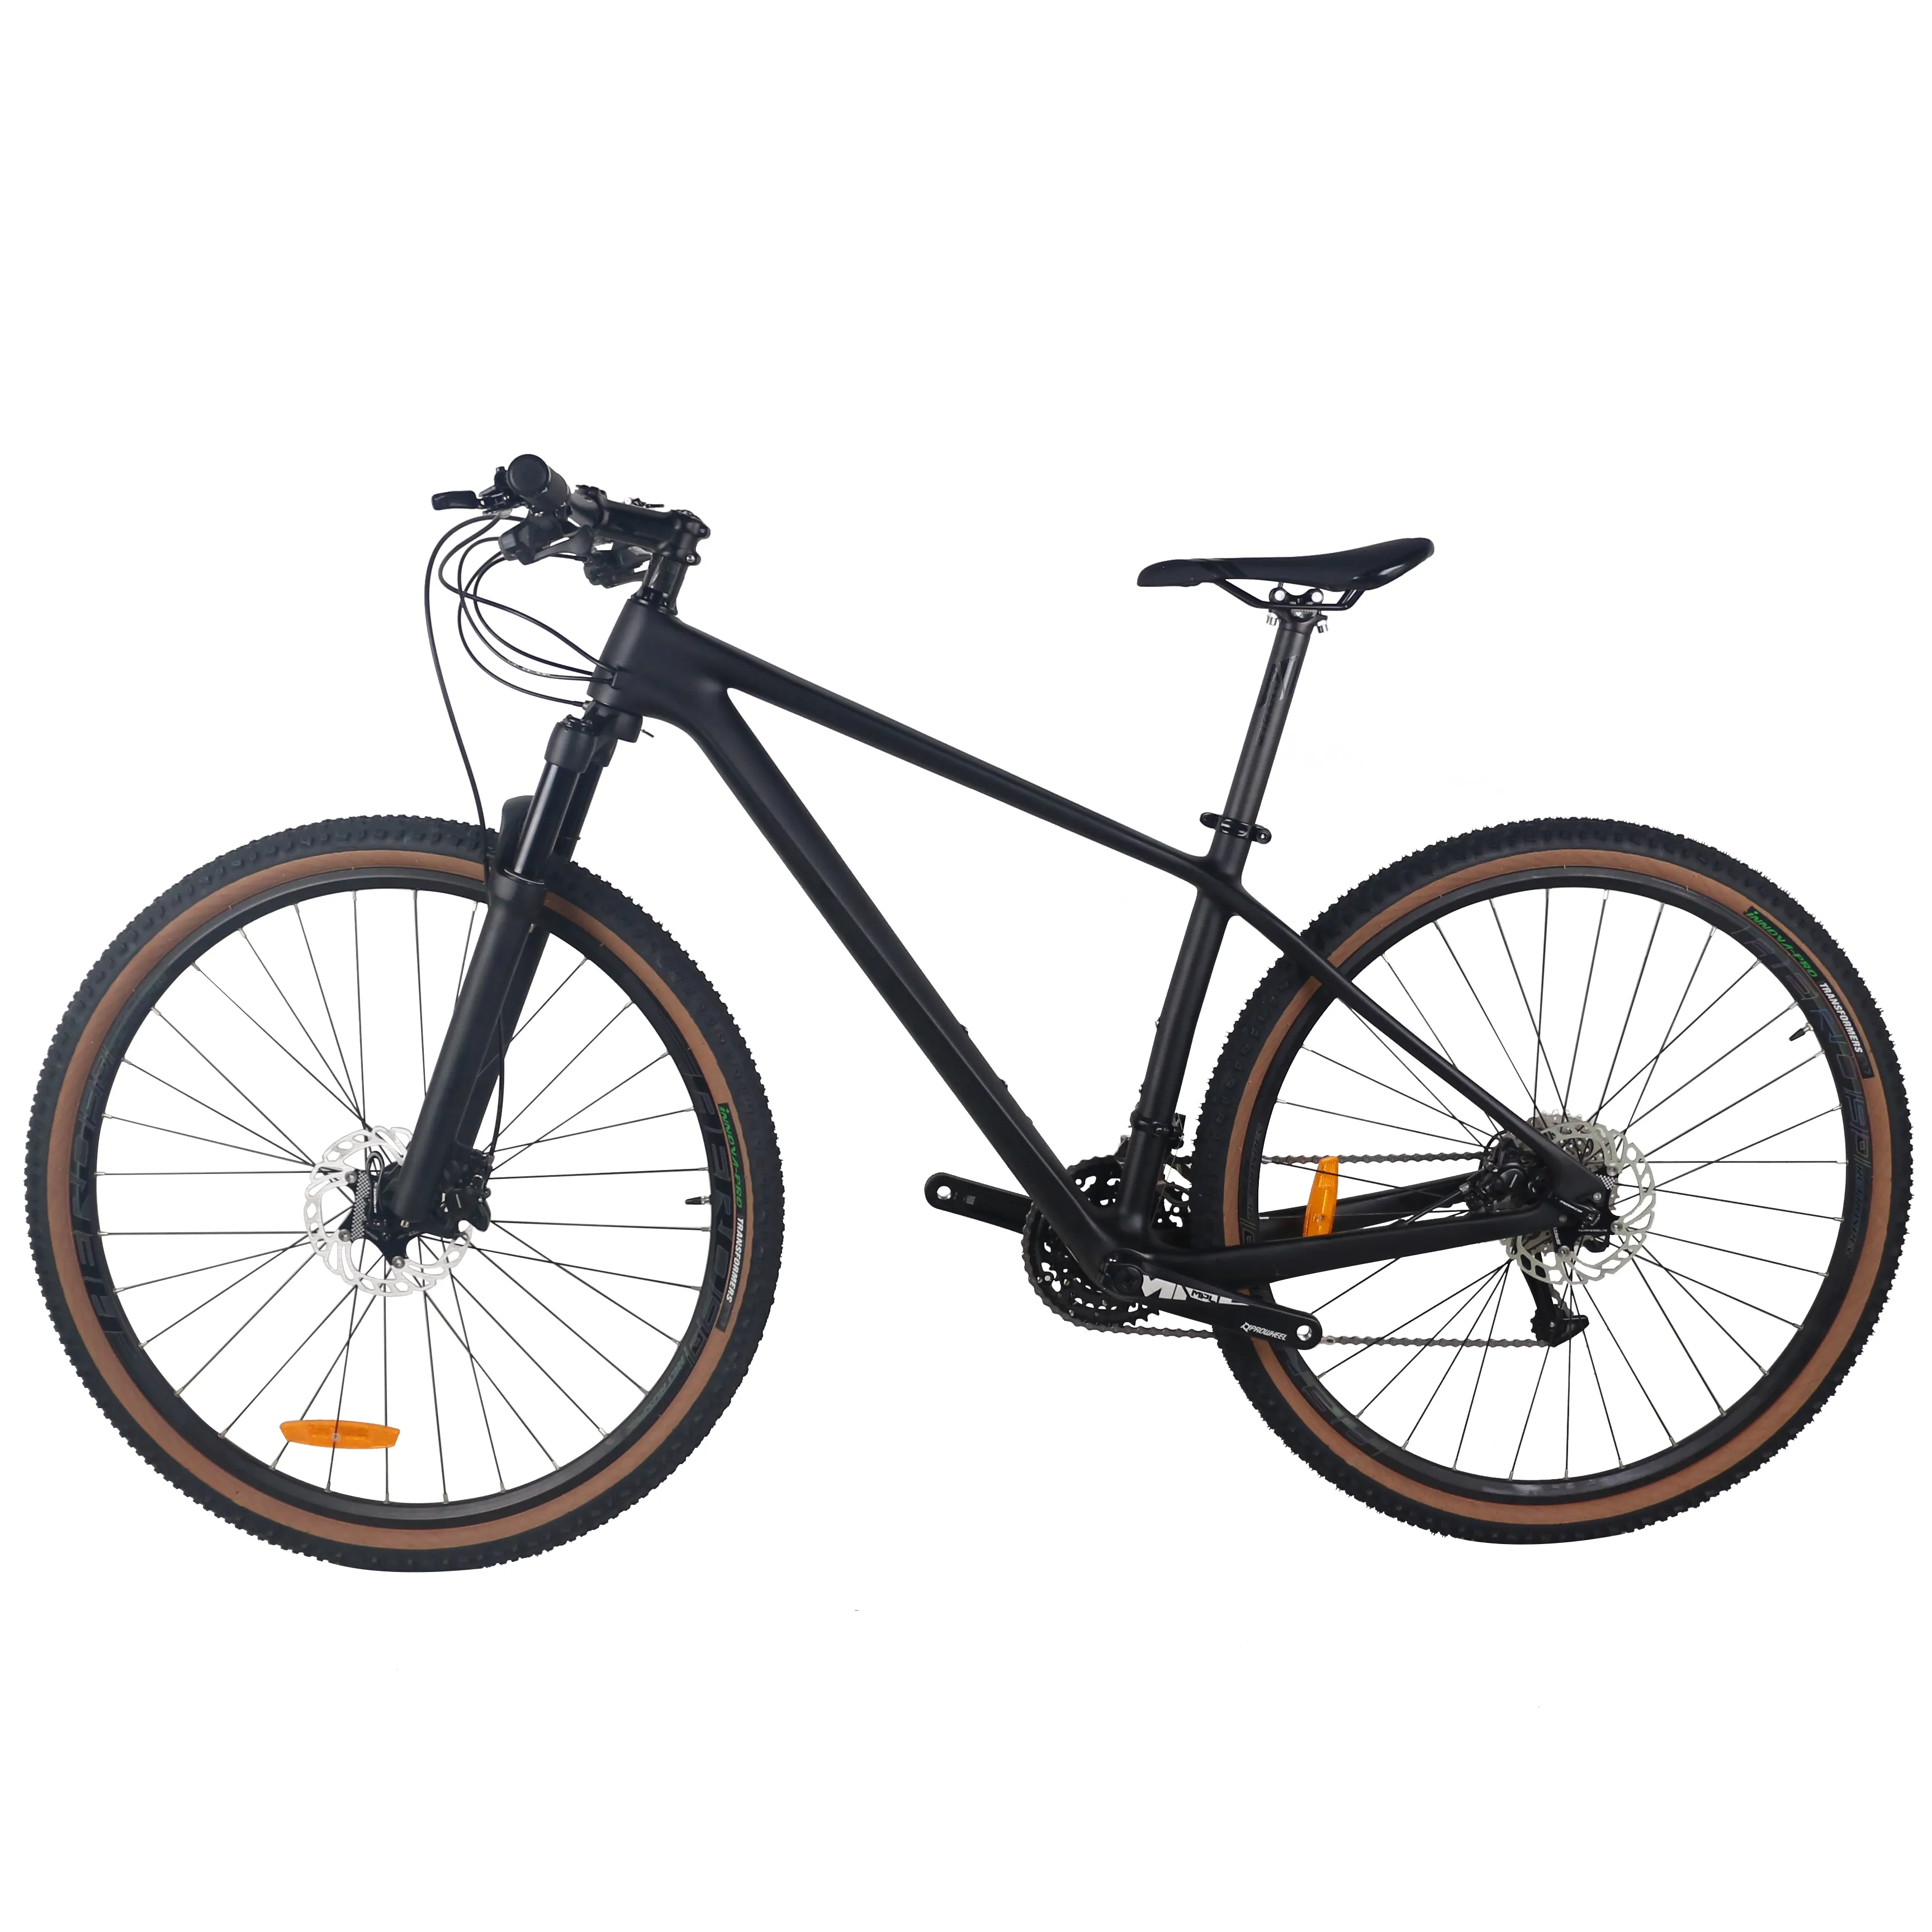 Kit completo de bicicleta de carbono, 29er/27.5er, mtb, mountain bike, parte de bicicleta, 3*10, preto fosco, fm699